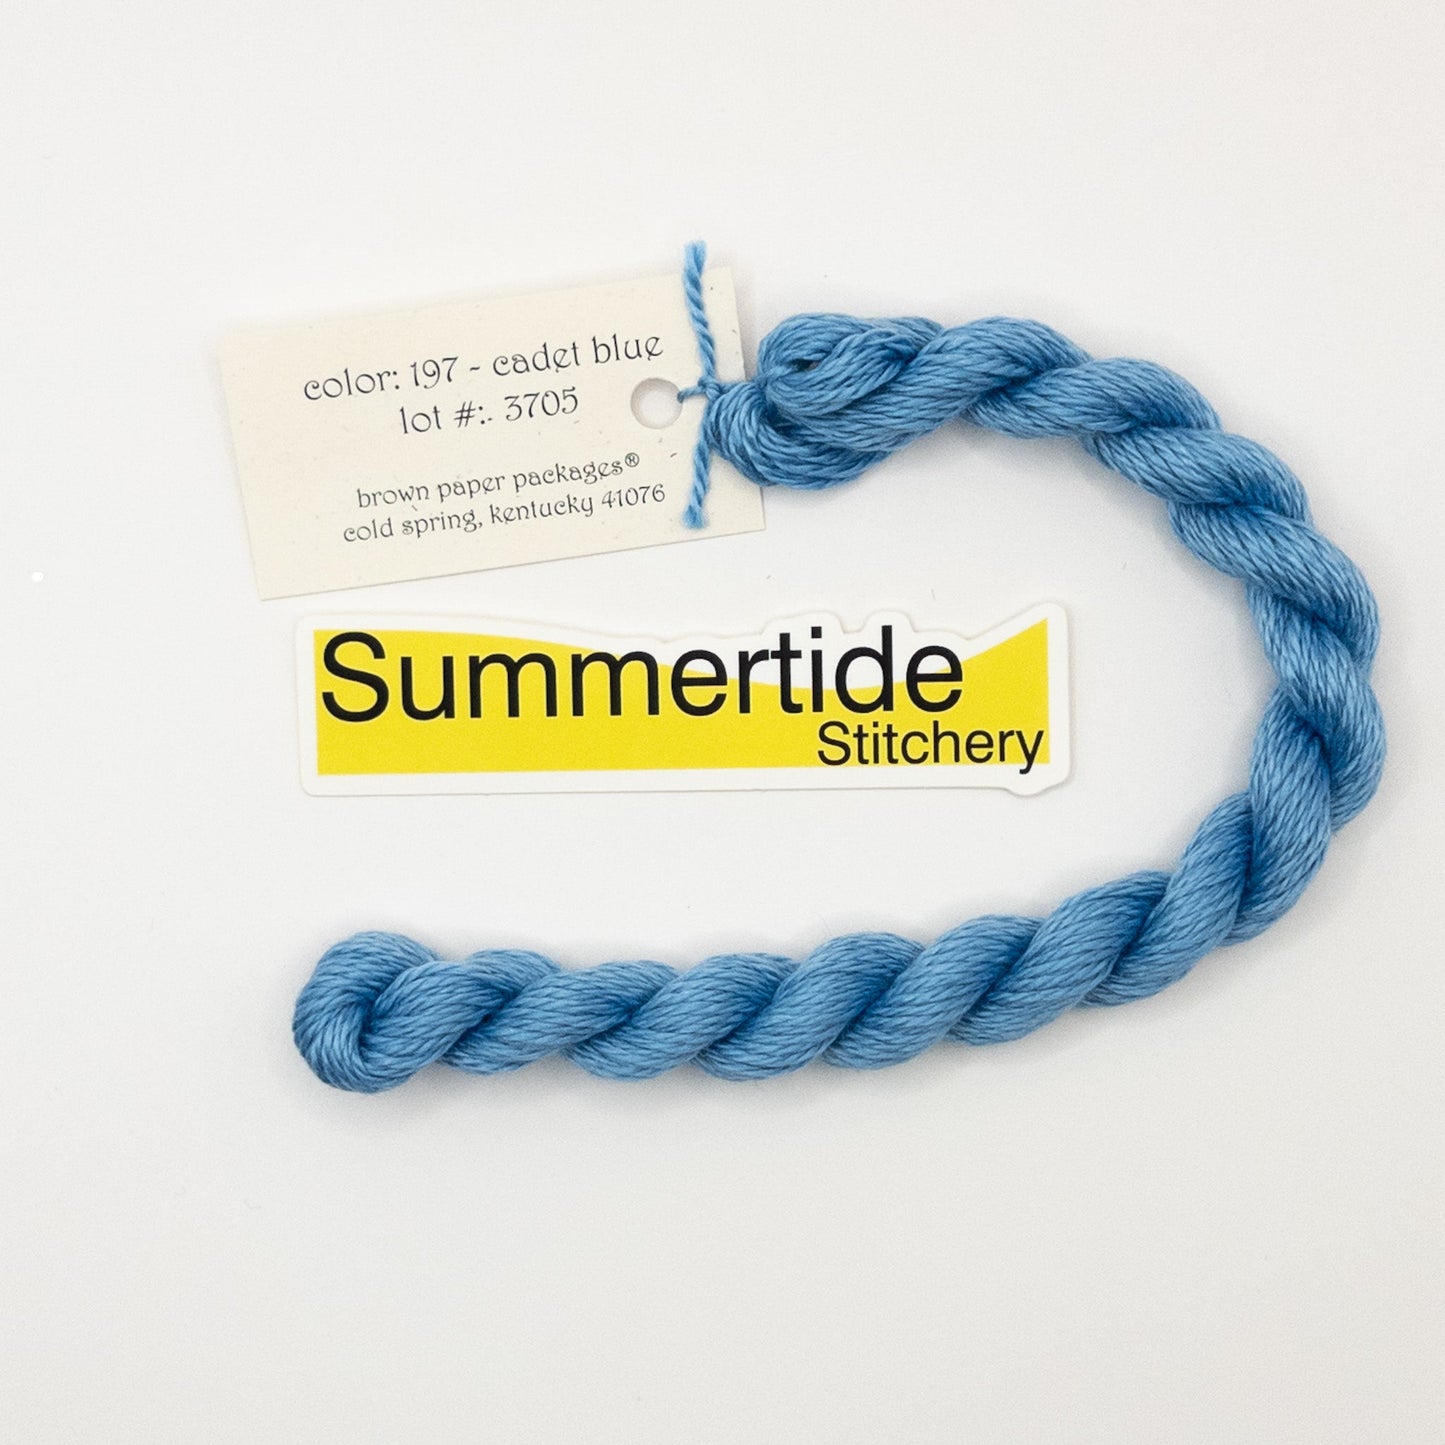 Silk & Ivory 197 Cadet Blue - Summertide Stitchery - Brown Paper Packages